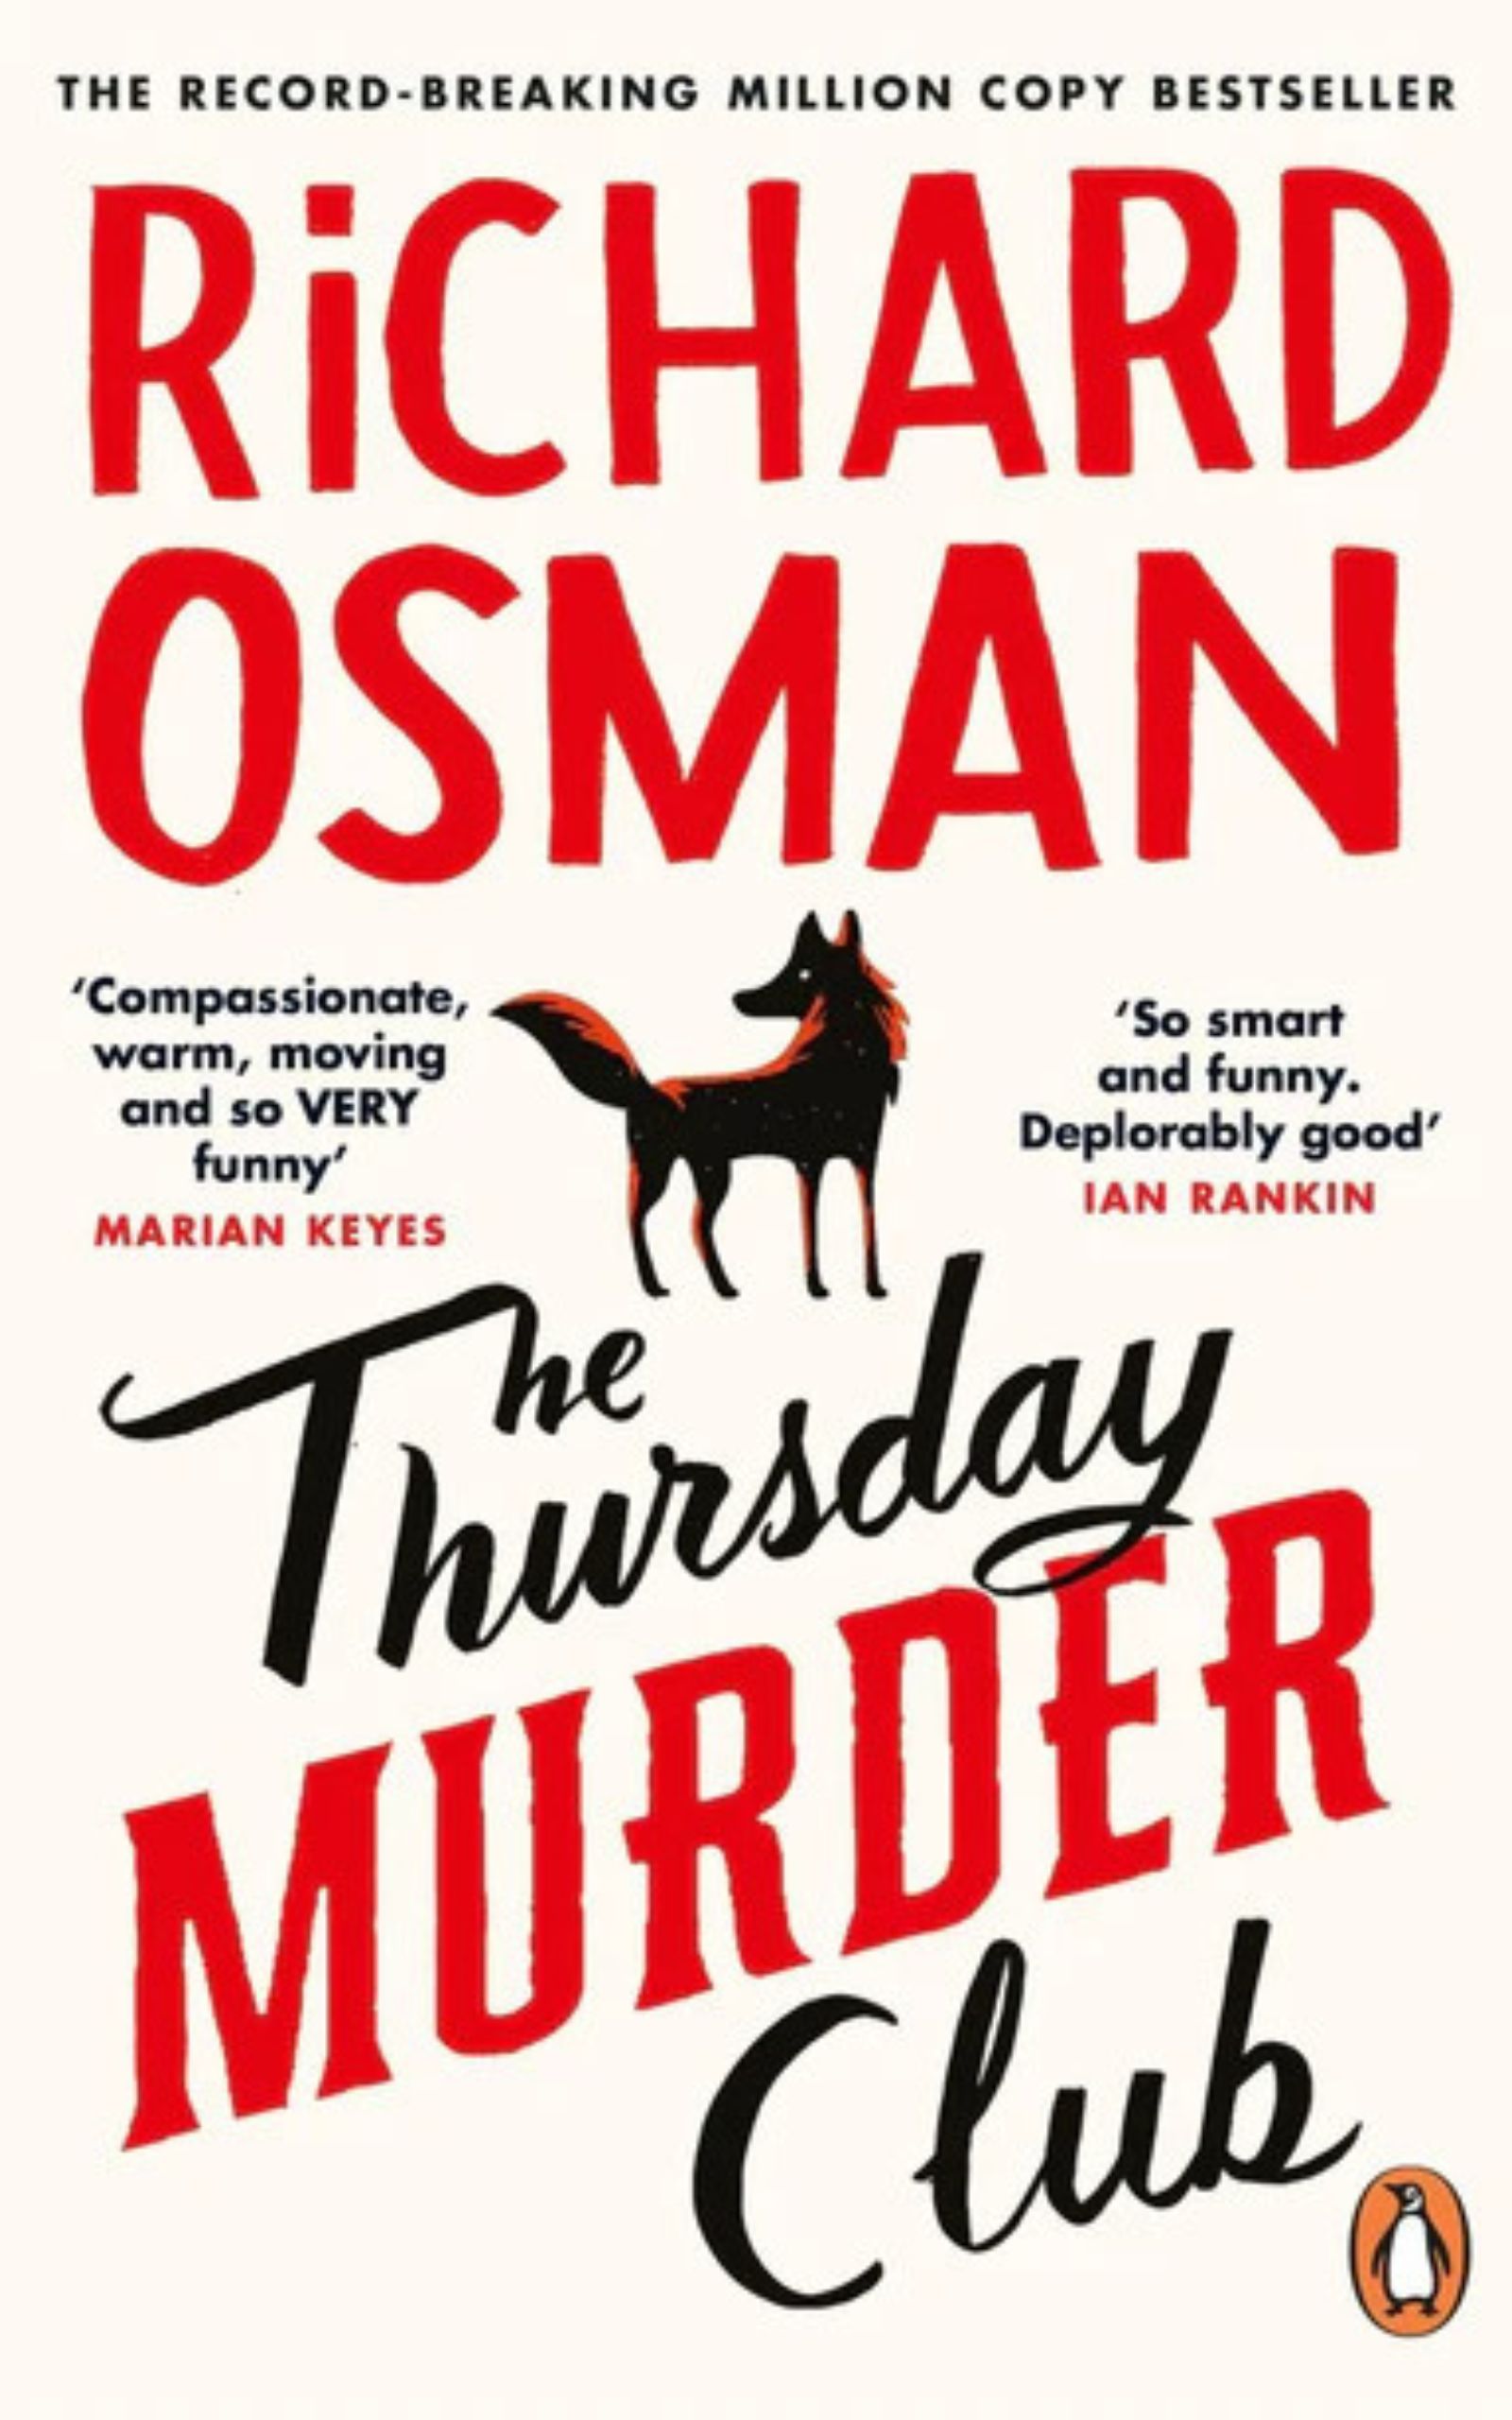 The Thursday Murder Club by Richard Osman.